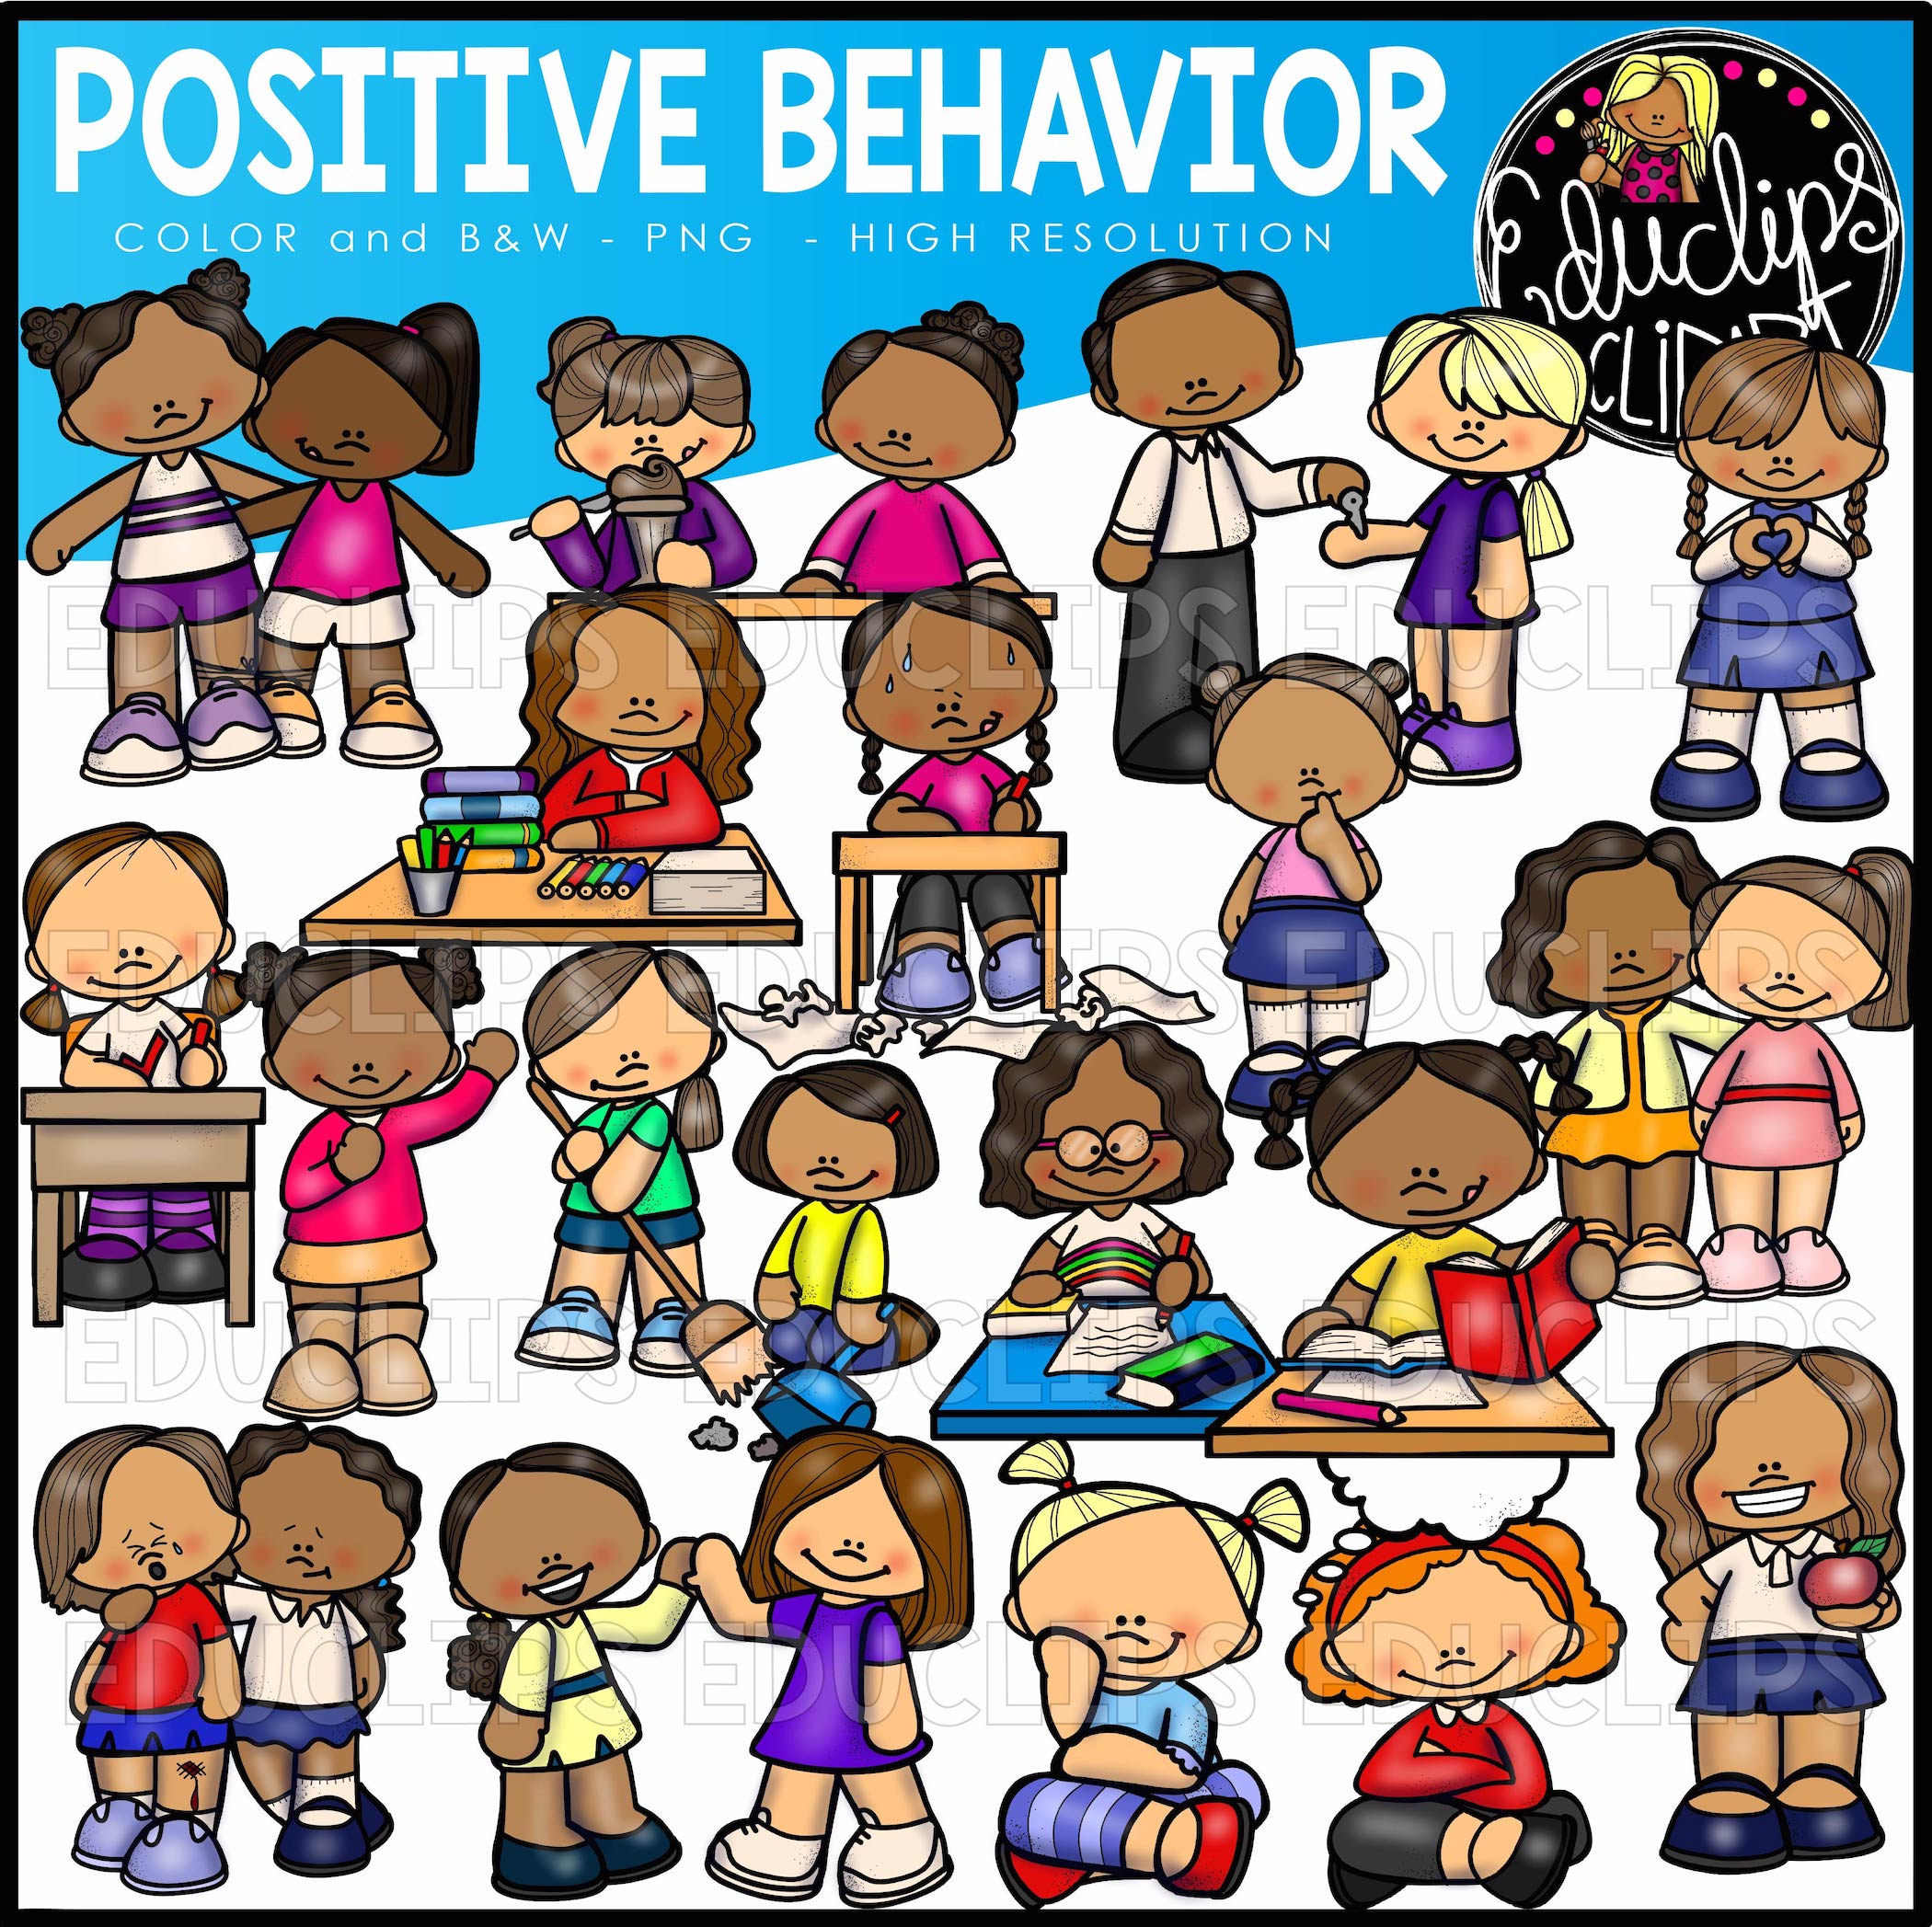 Positive & Negative Behavior Clip Art Big Bundle (Color and B&W).